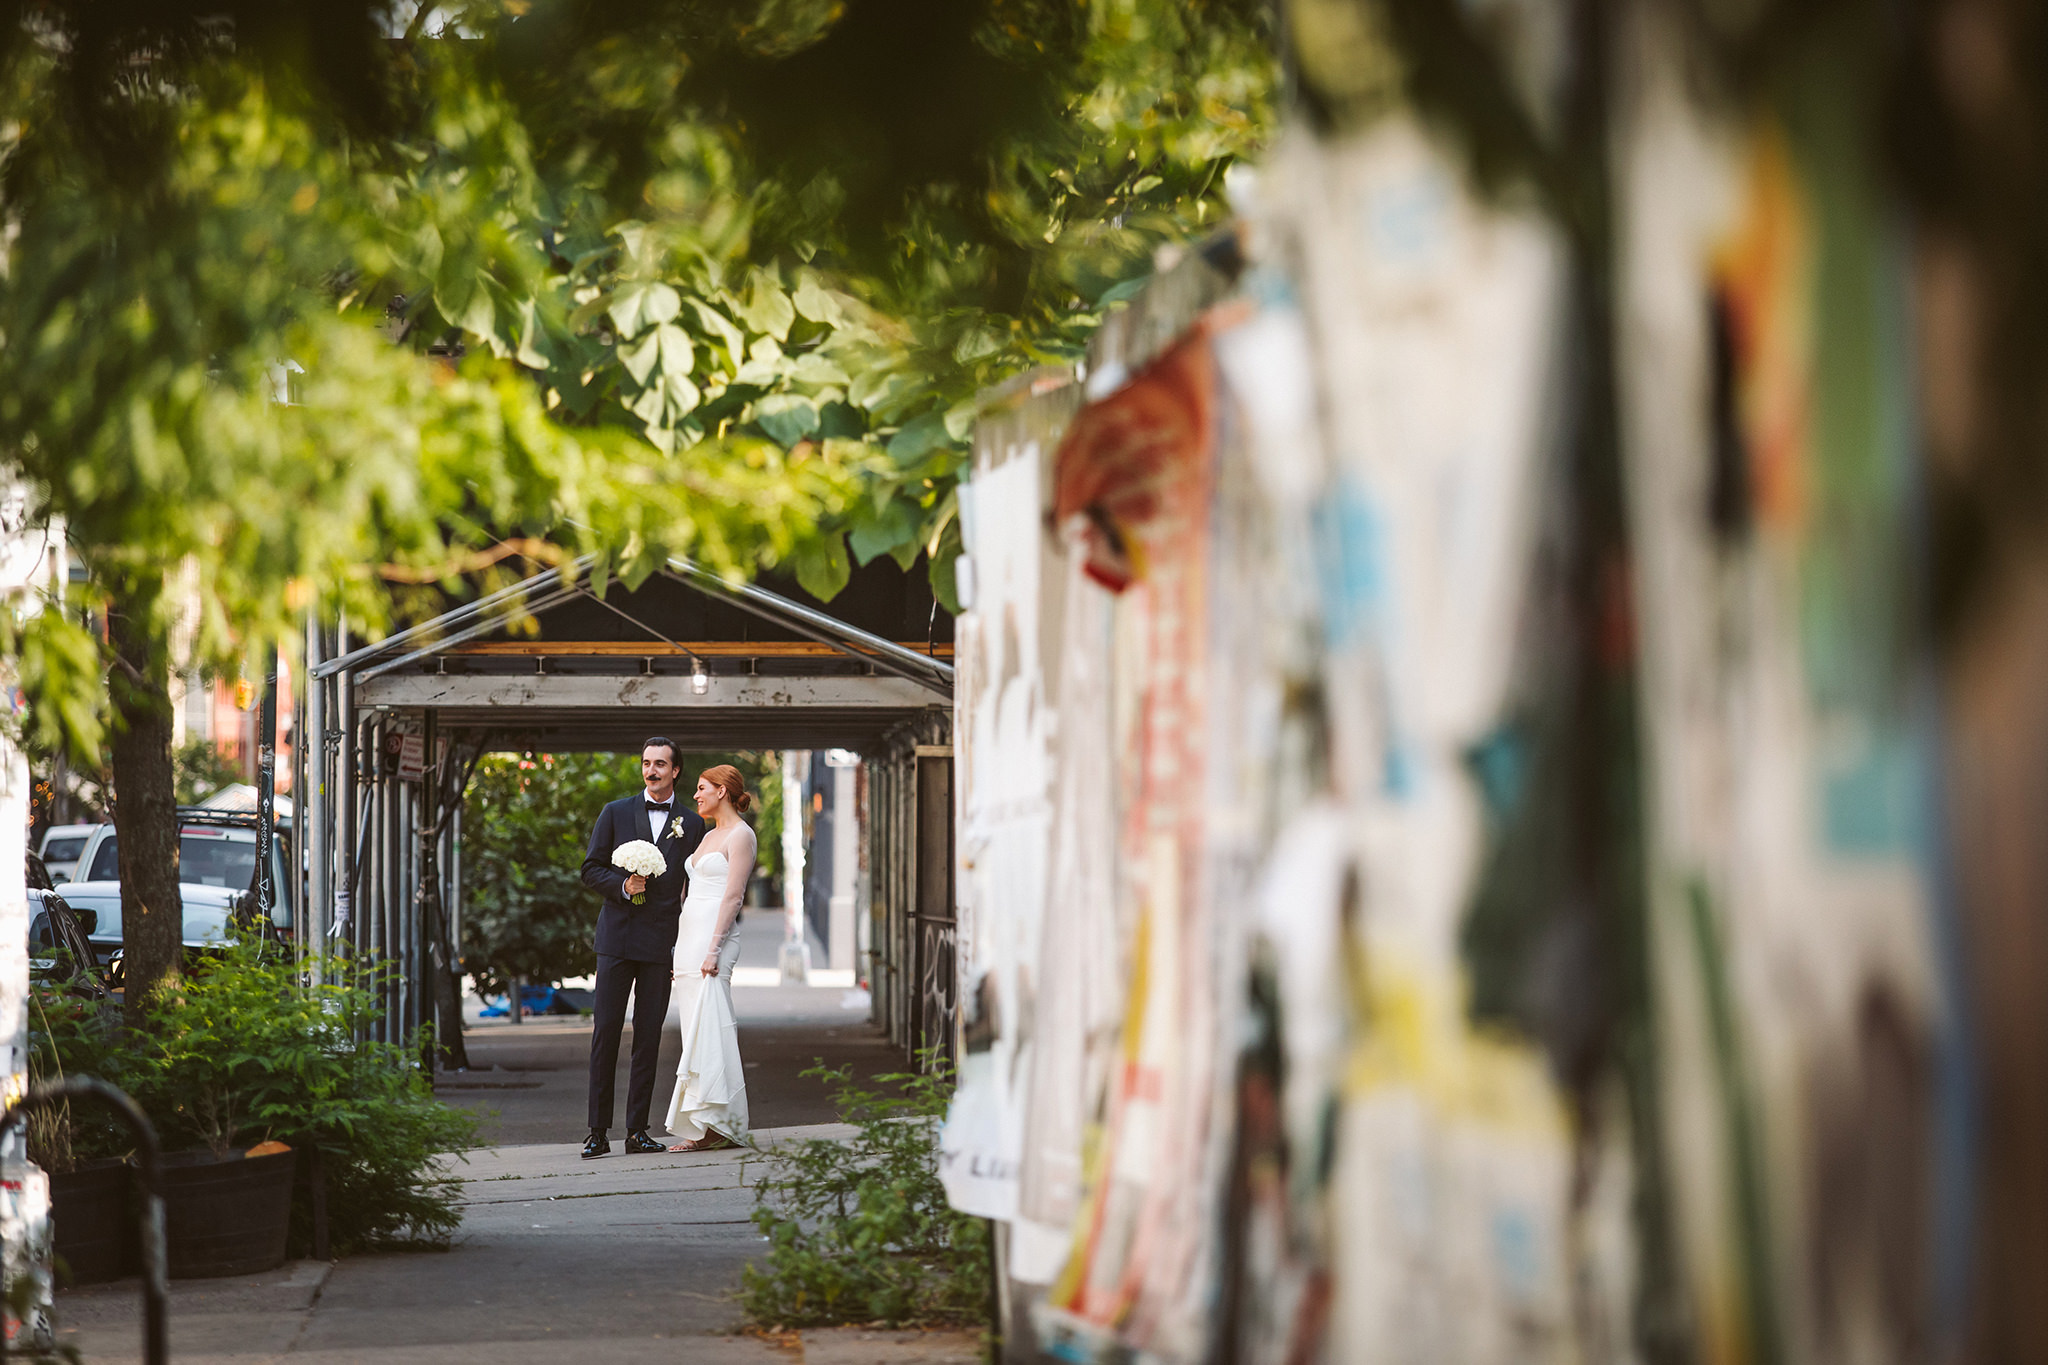 A bride and groom walking around Williamsburg in Brooklyn, New York